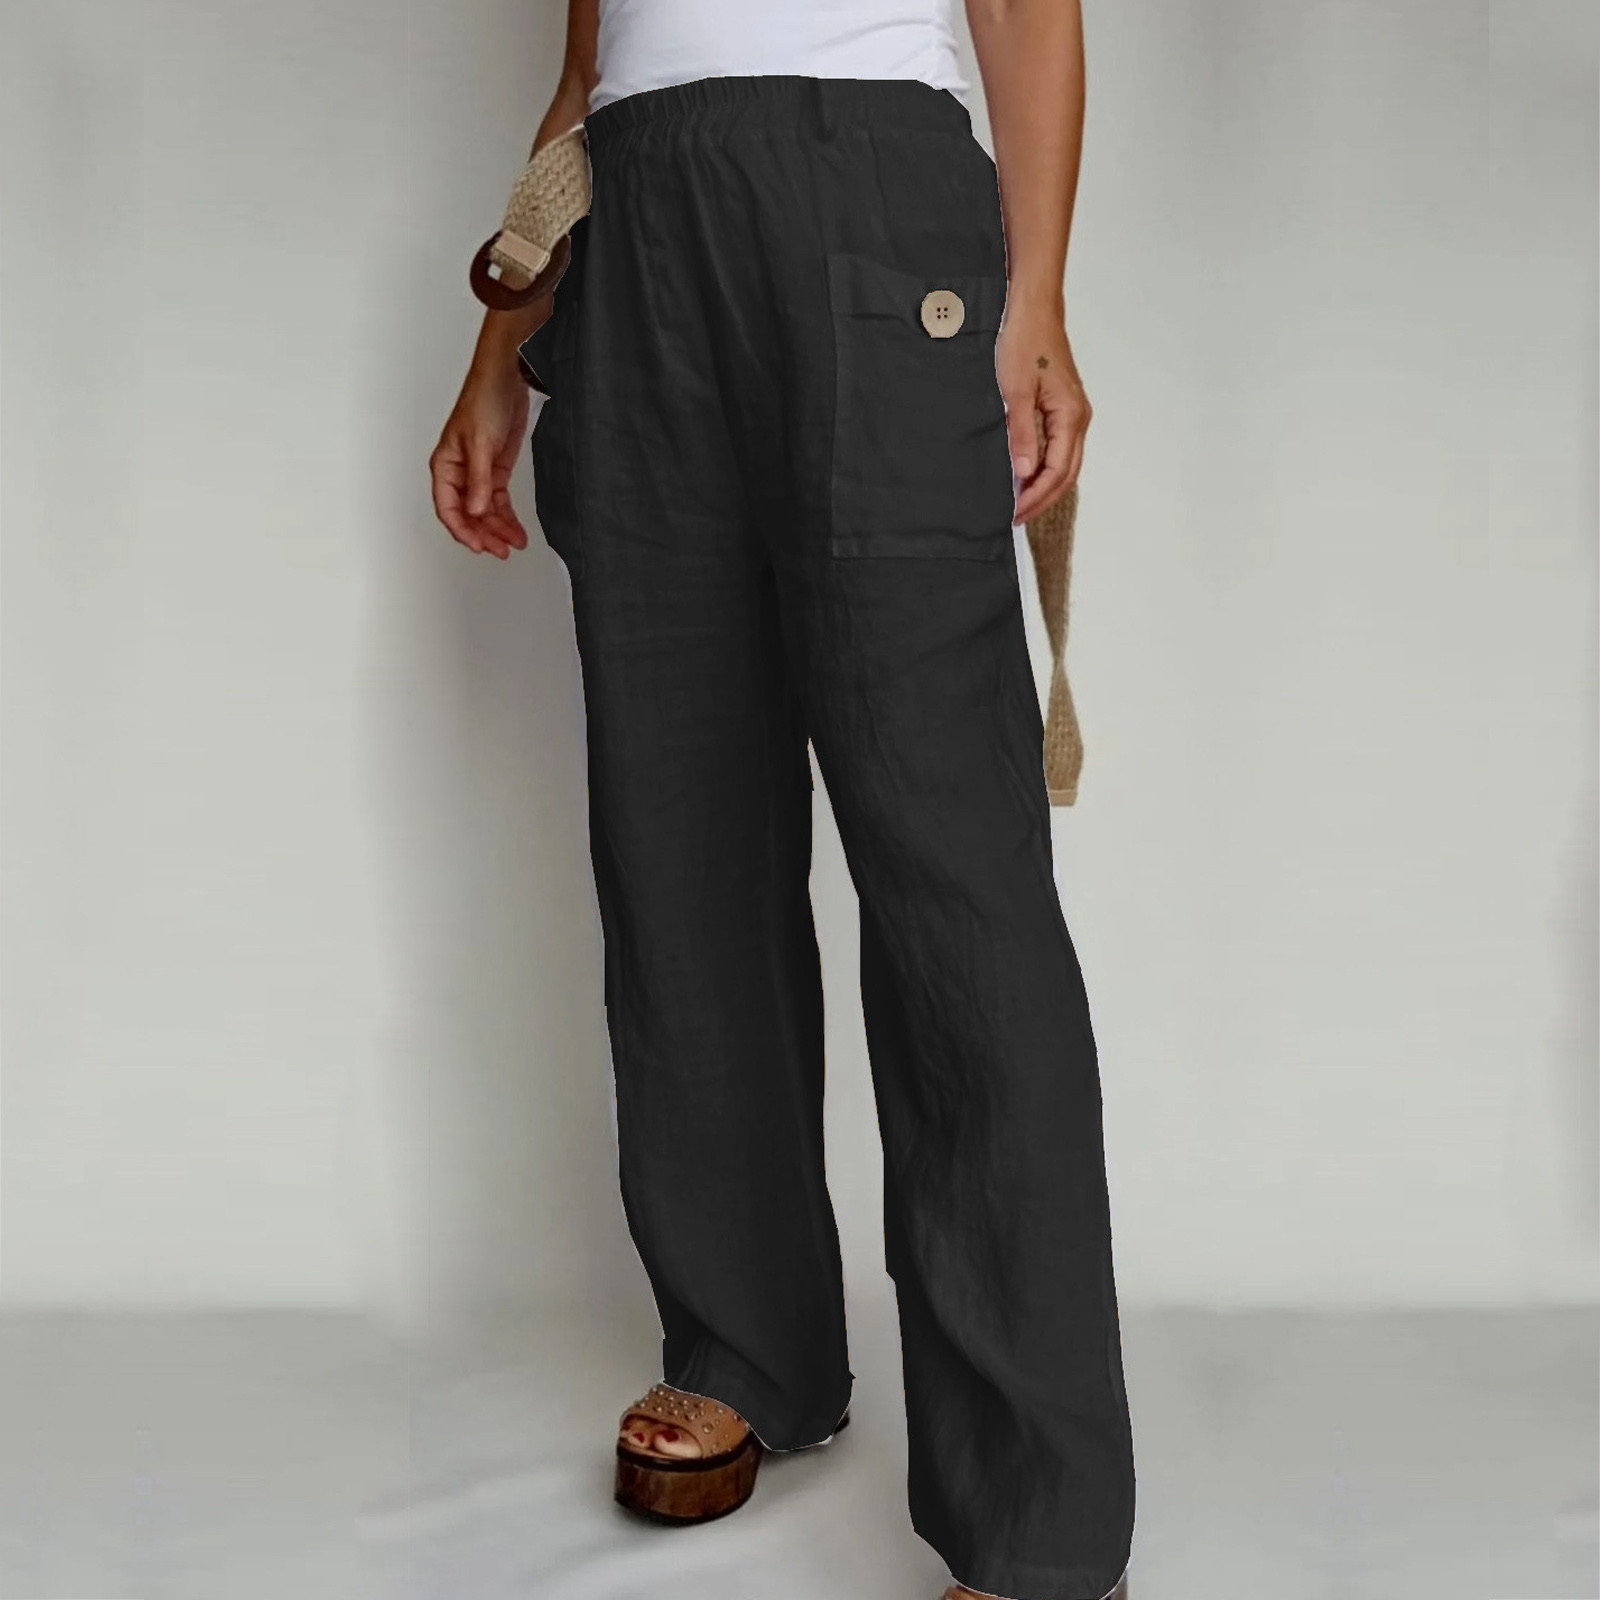 Rotimia Cotton linen casual pants home trousers